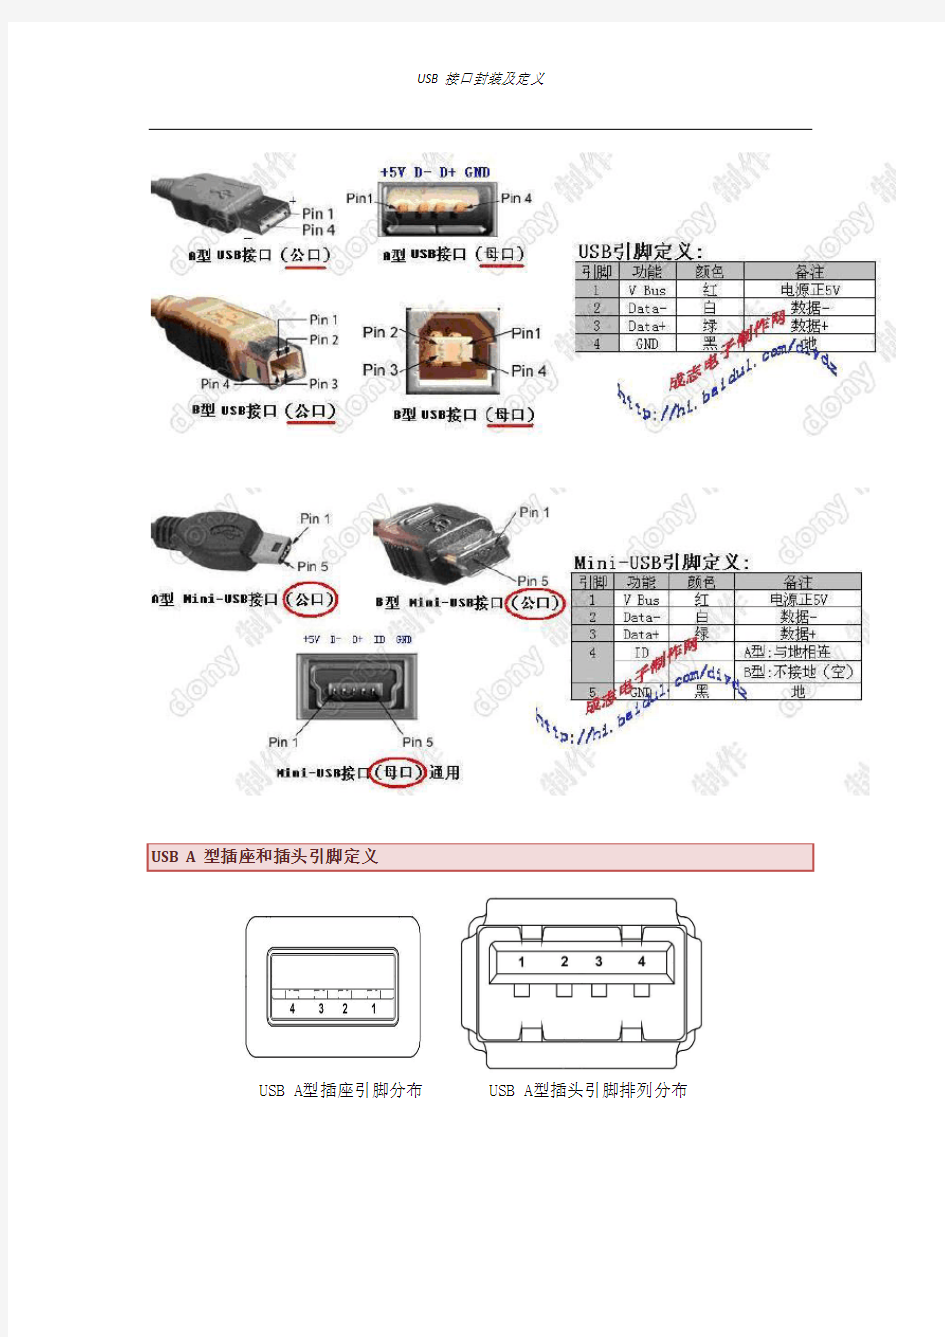 USBA型、B型、Mini和Micro接口定义及封装